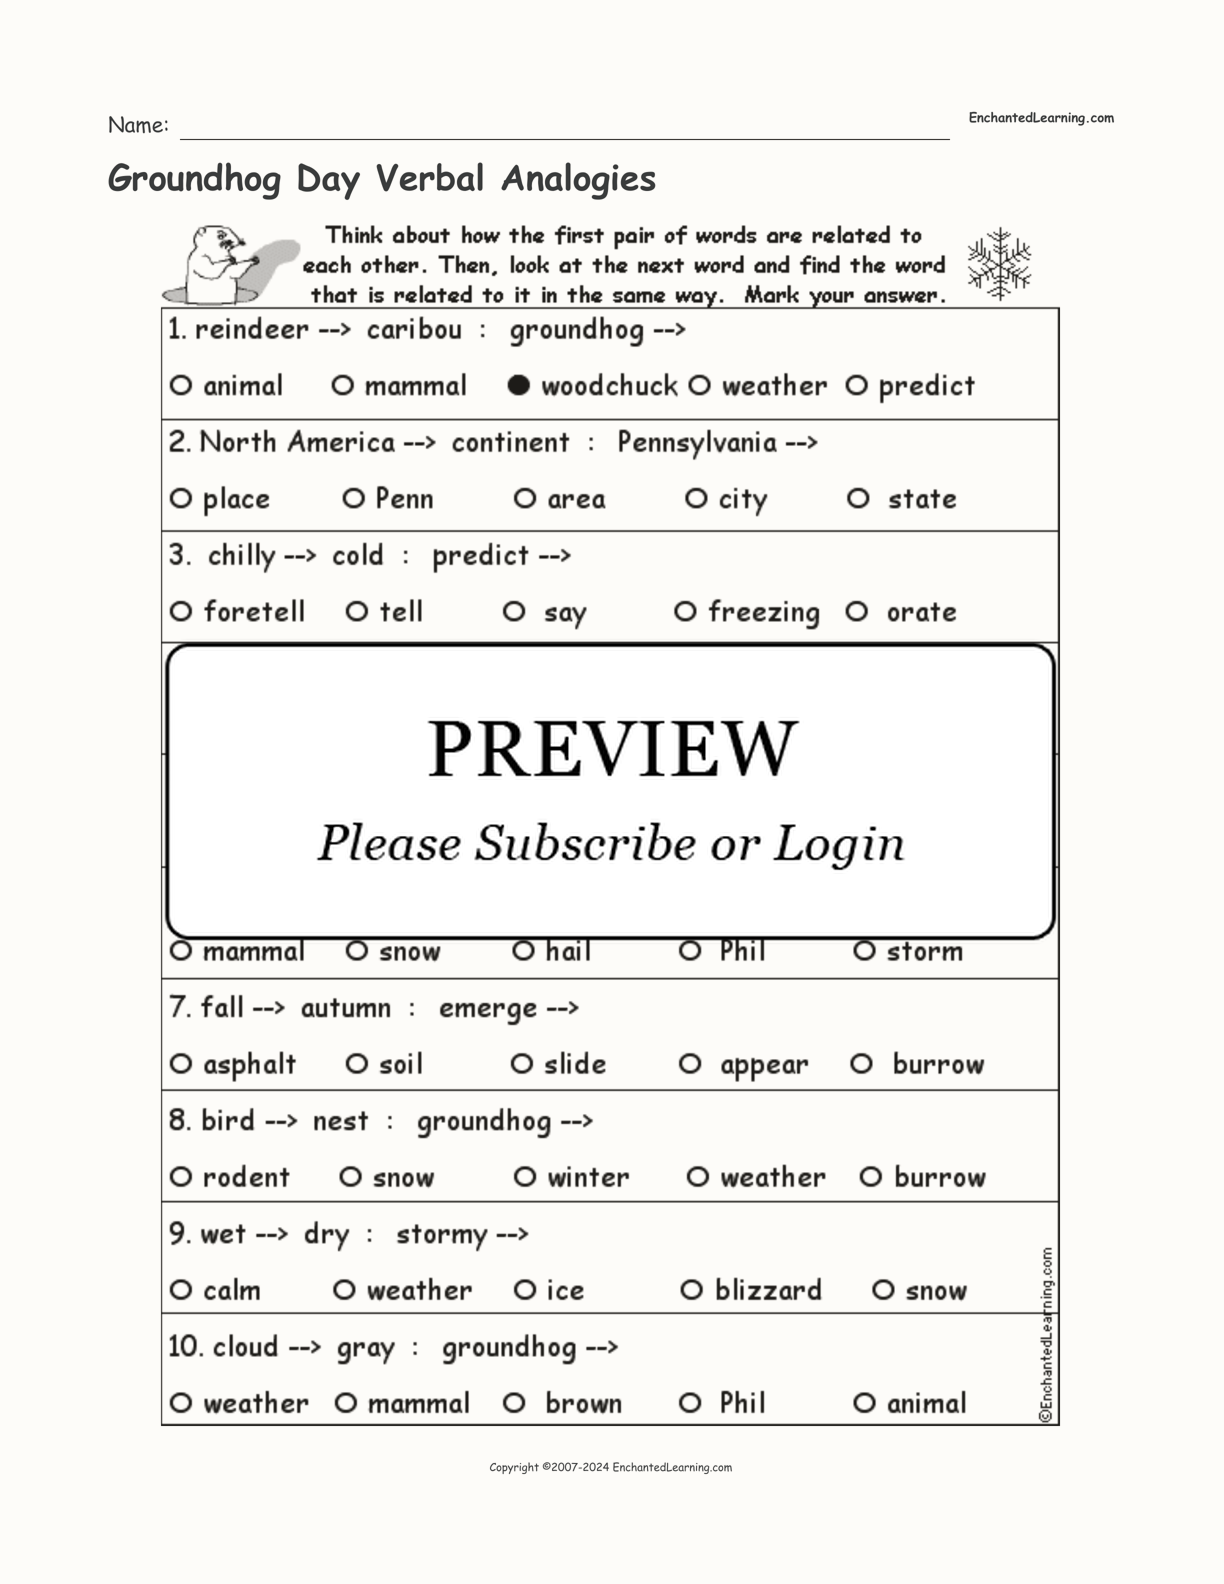 Groundhog Day Verbal Analogies interactive worksheet page 1